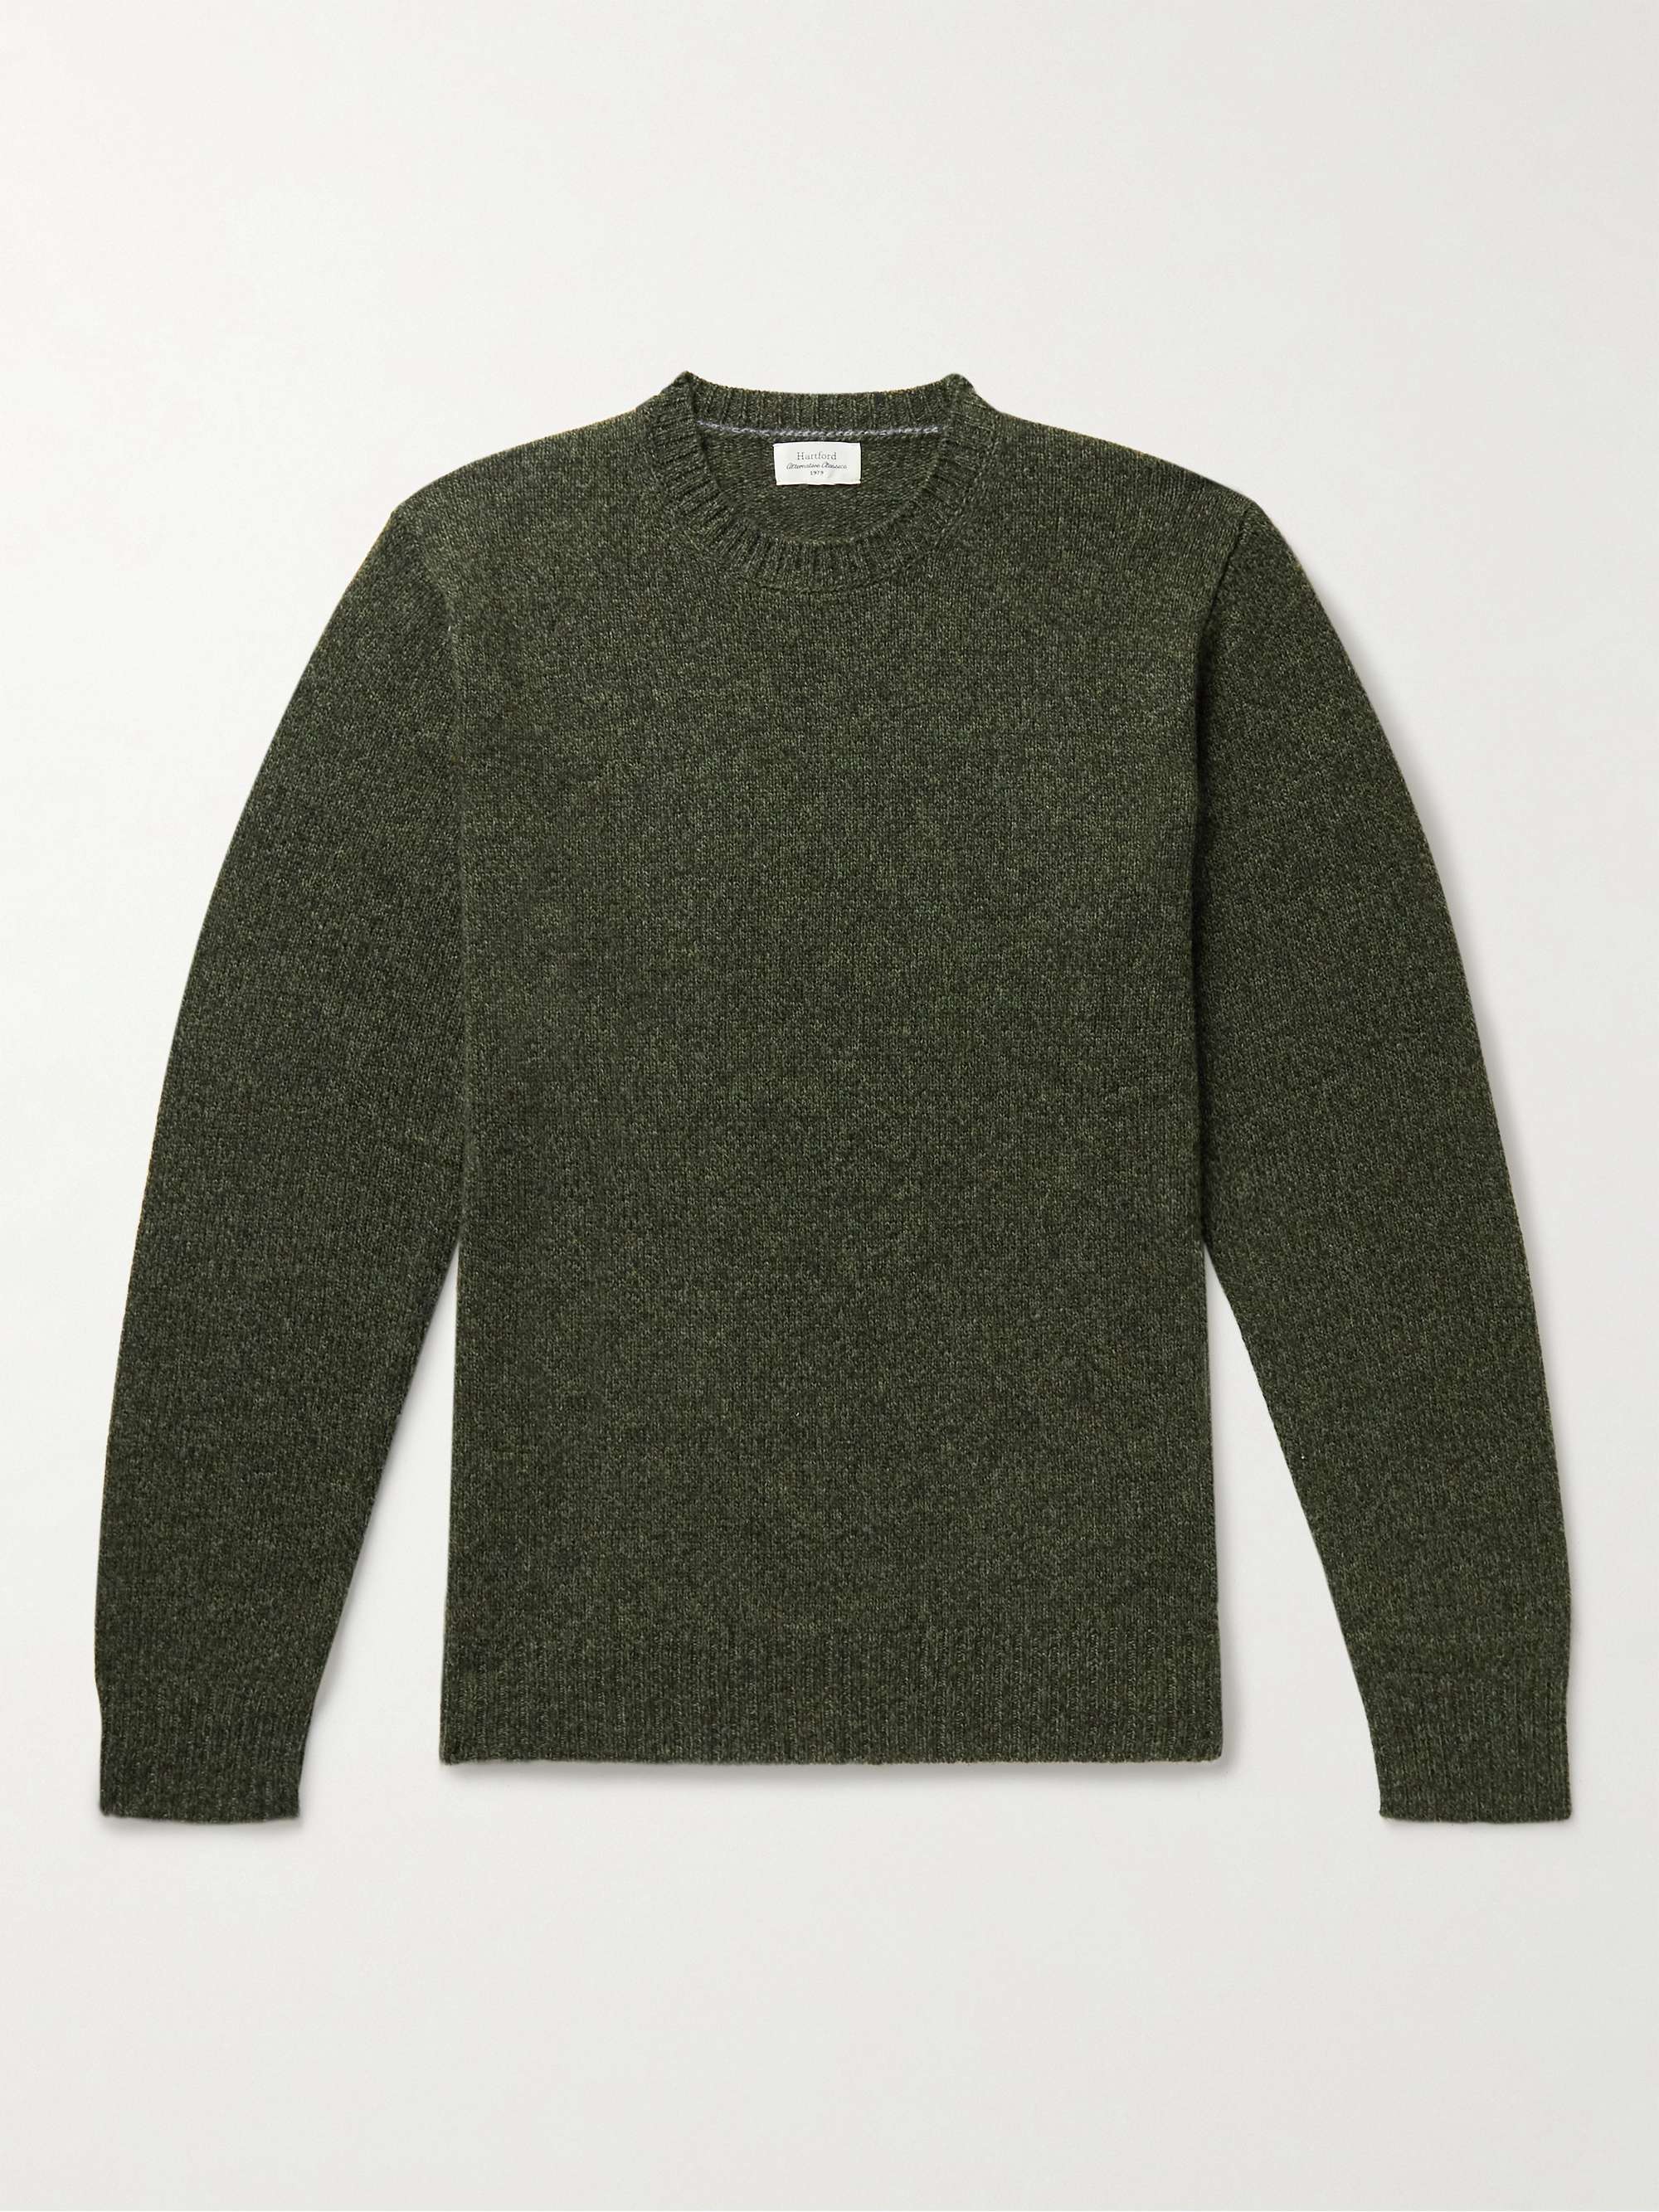 HARTFORD Shetland Wool and Nylon-Blend Sweater